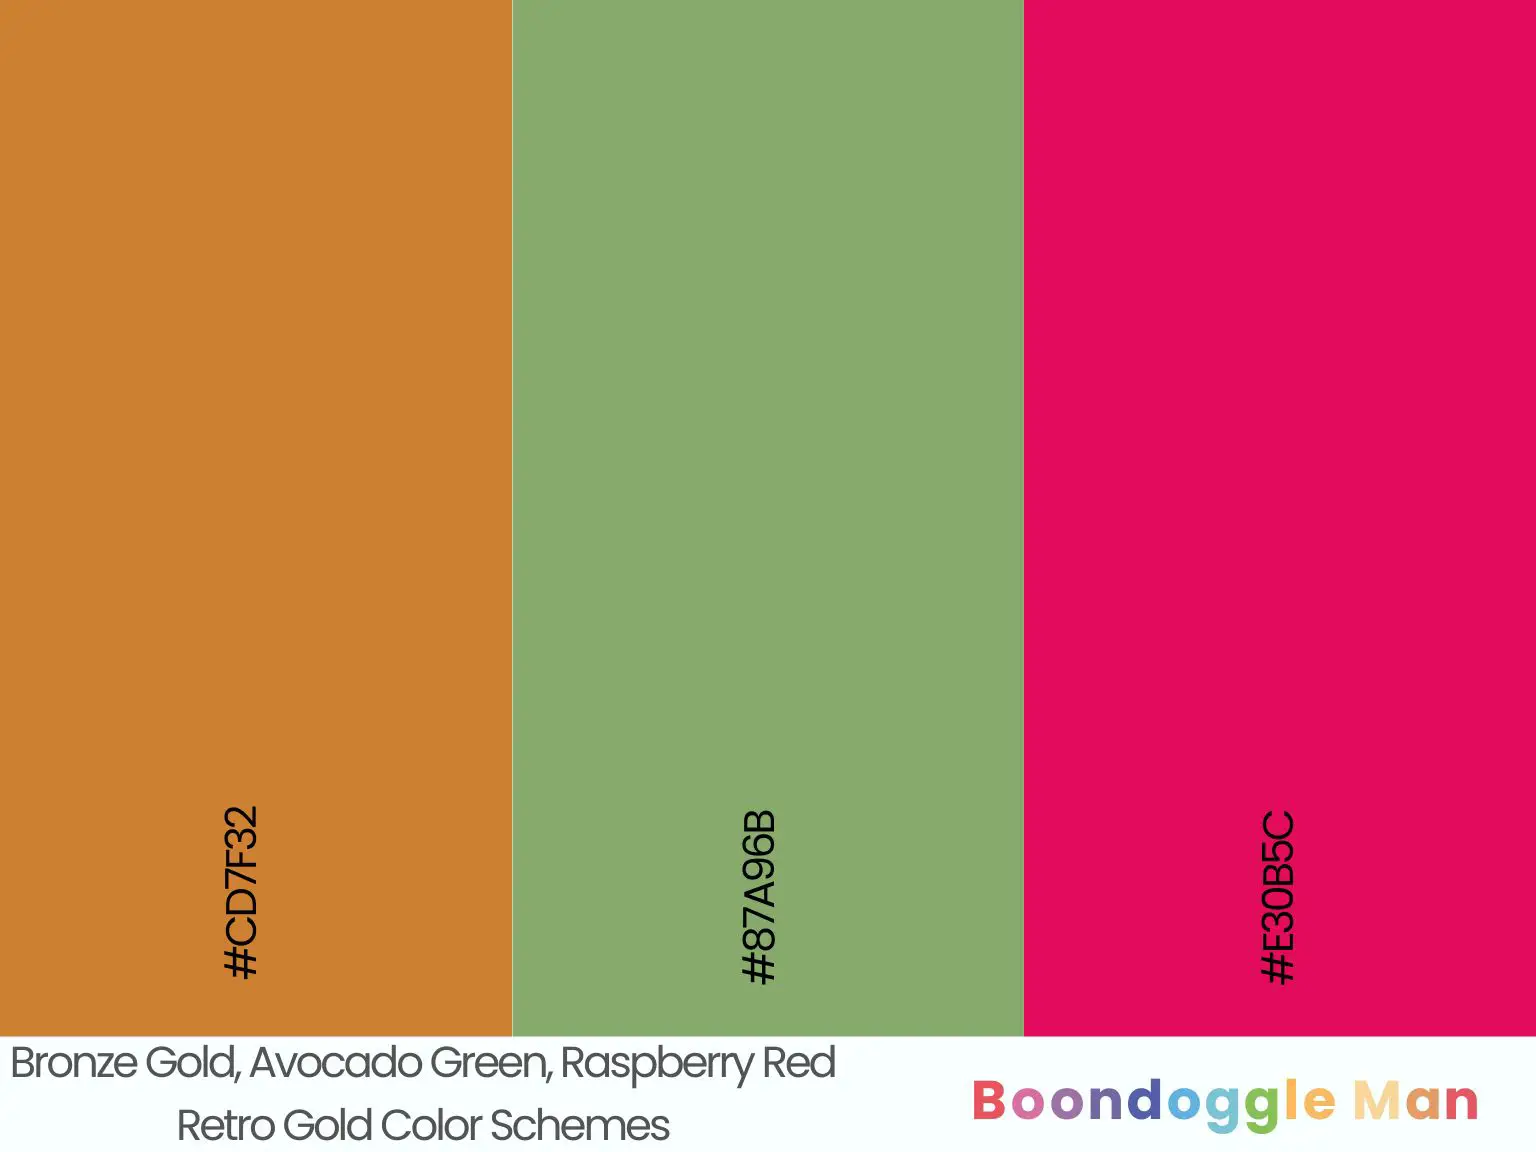 Bronze Gold, Avocado Green, Raspberry Red